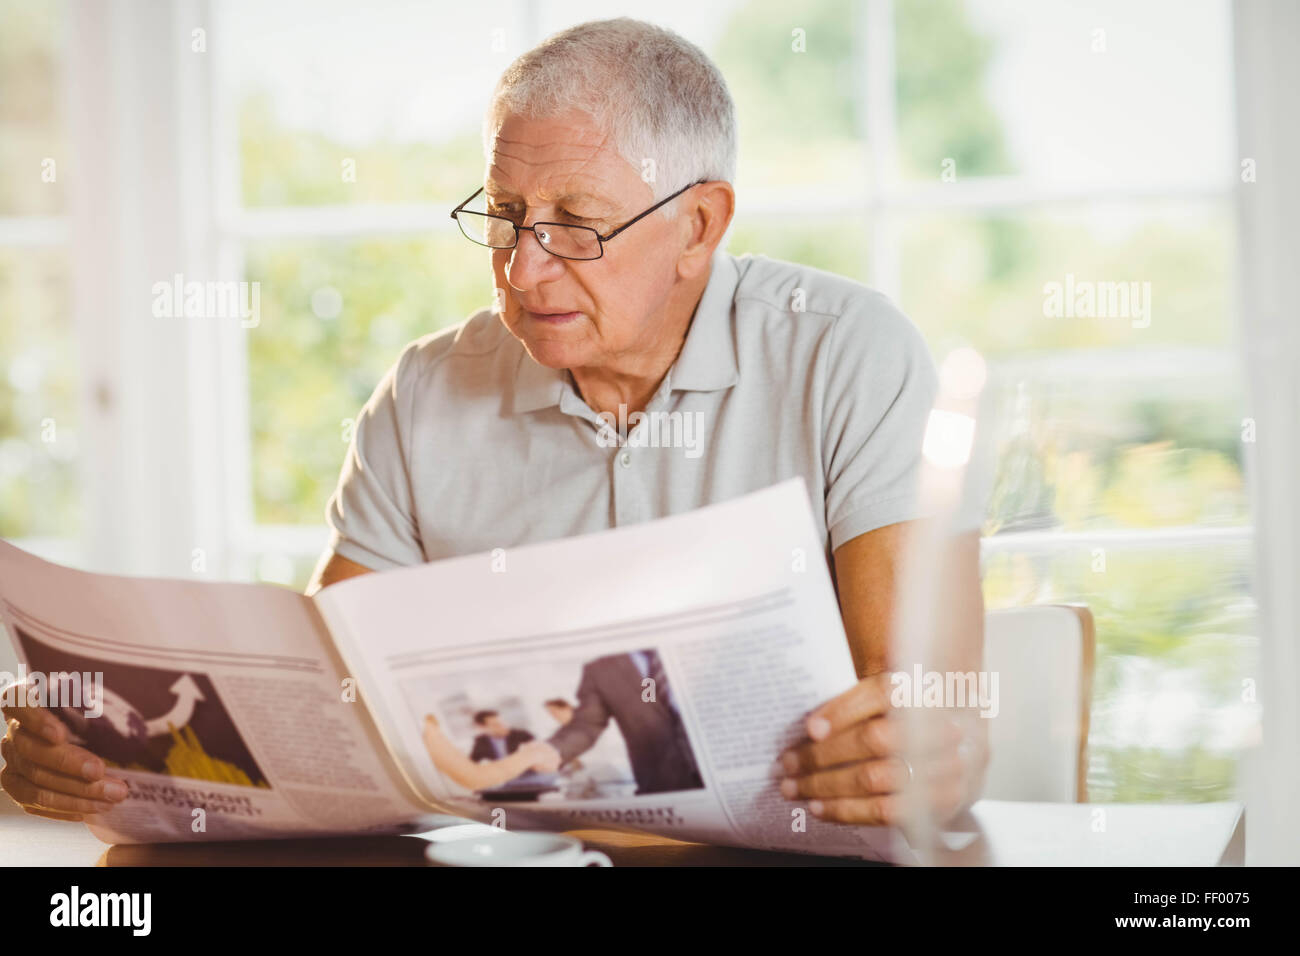 Focused senior man reading newspaper Stock Photo